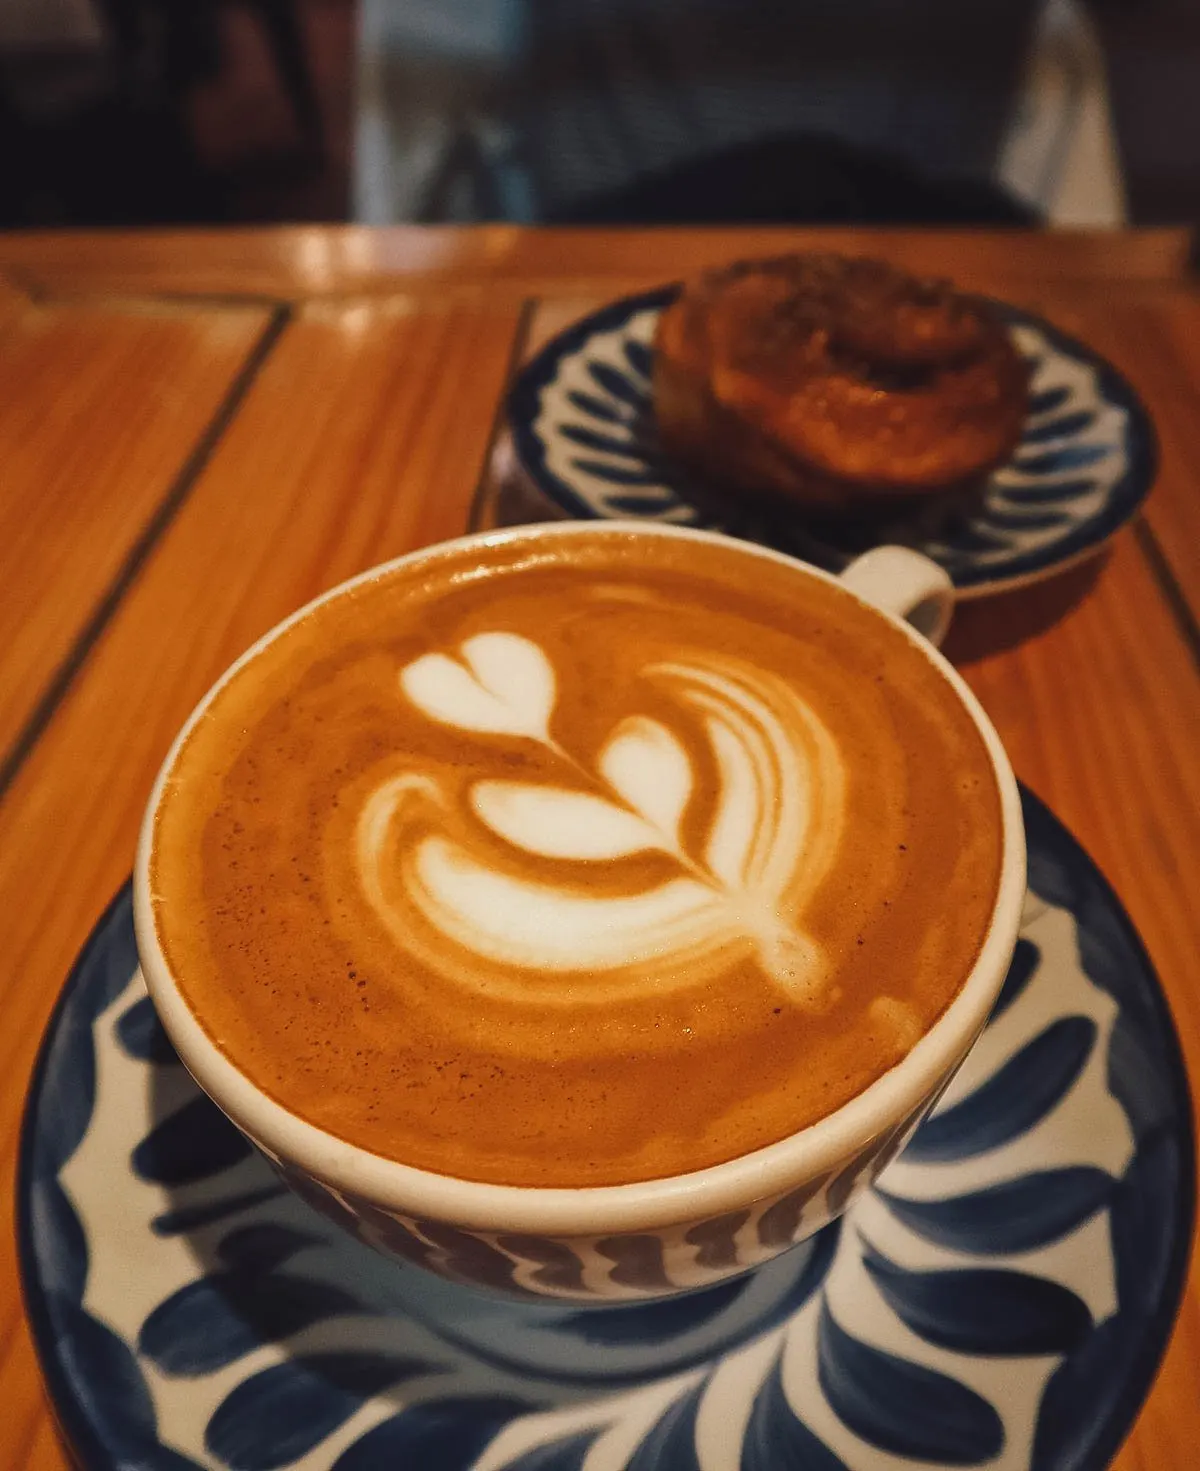 Cappuccino and cinnamon bun at Lavanda Cafe